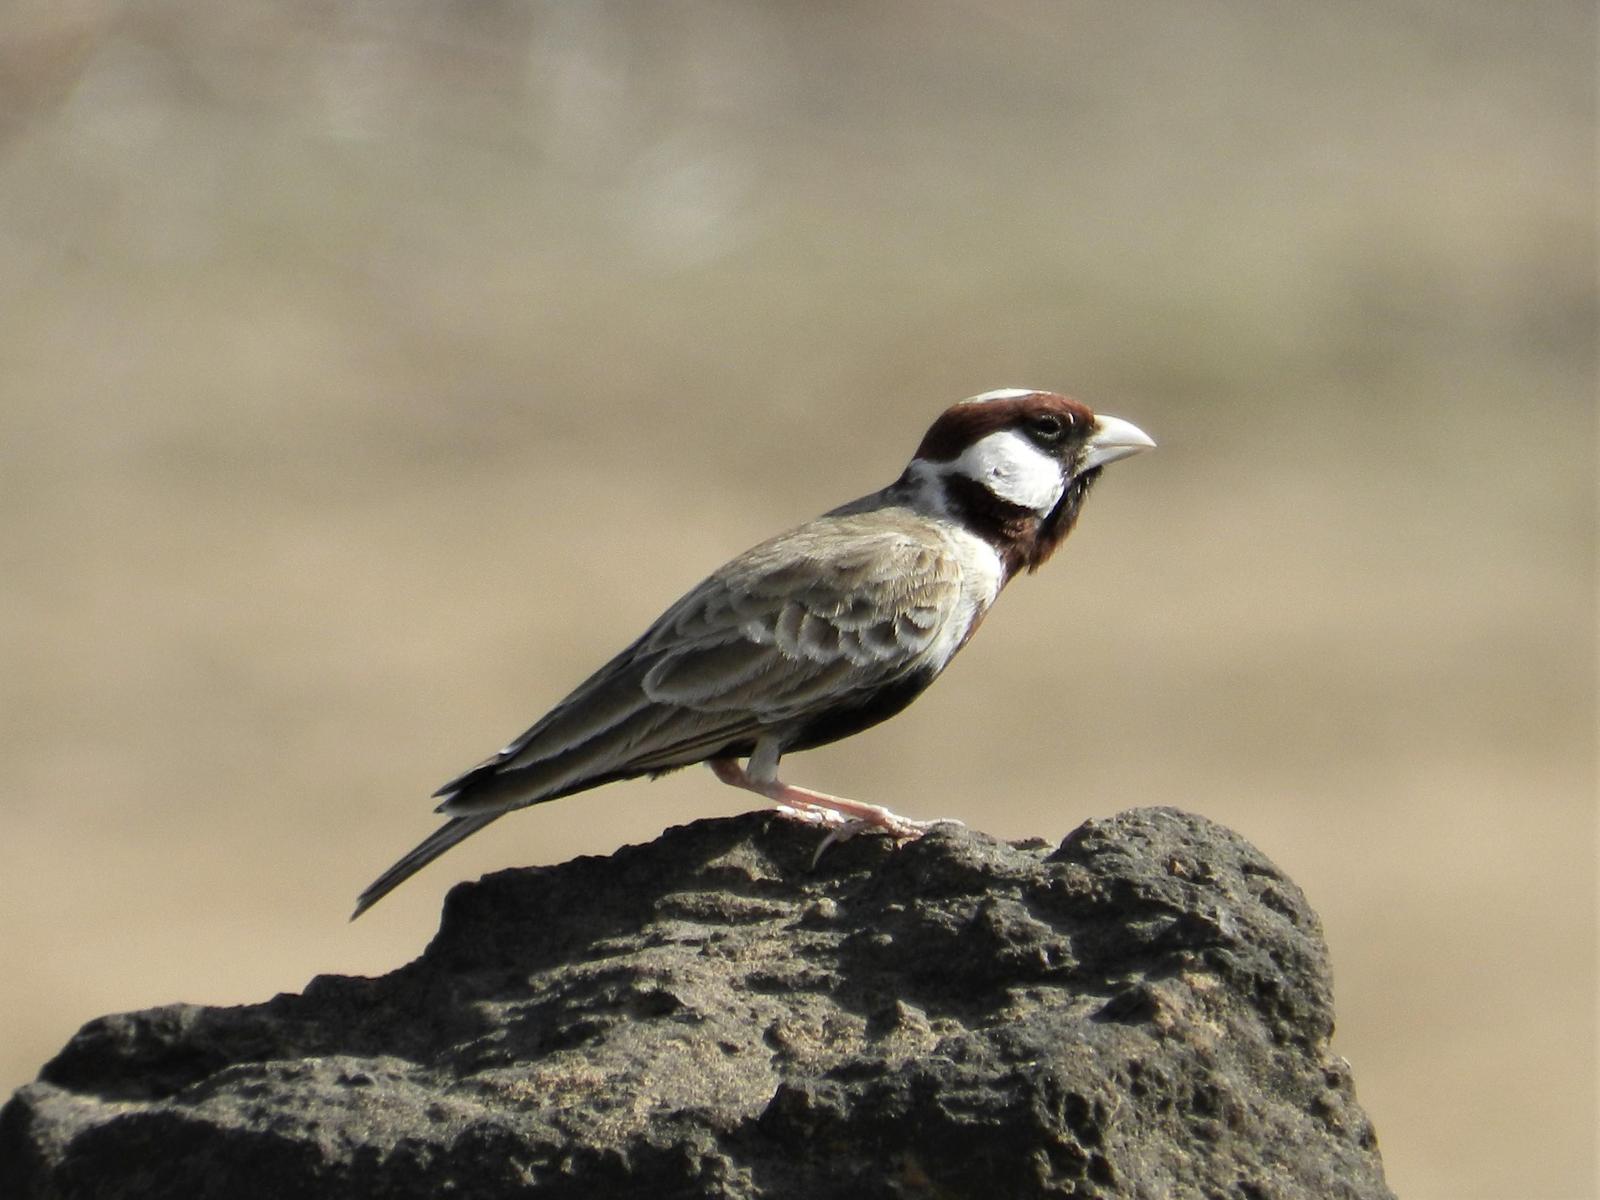 Chestnut-headed Sparrow-Lark Photo by Richard Jeffers